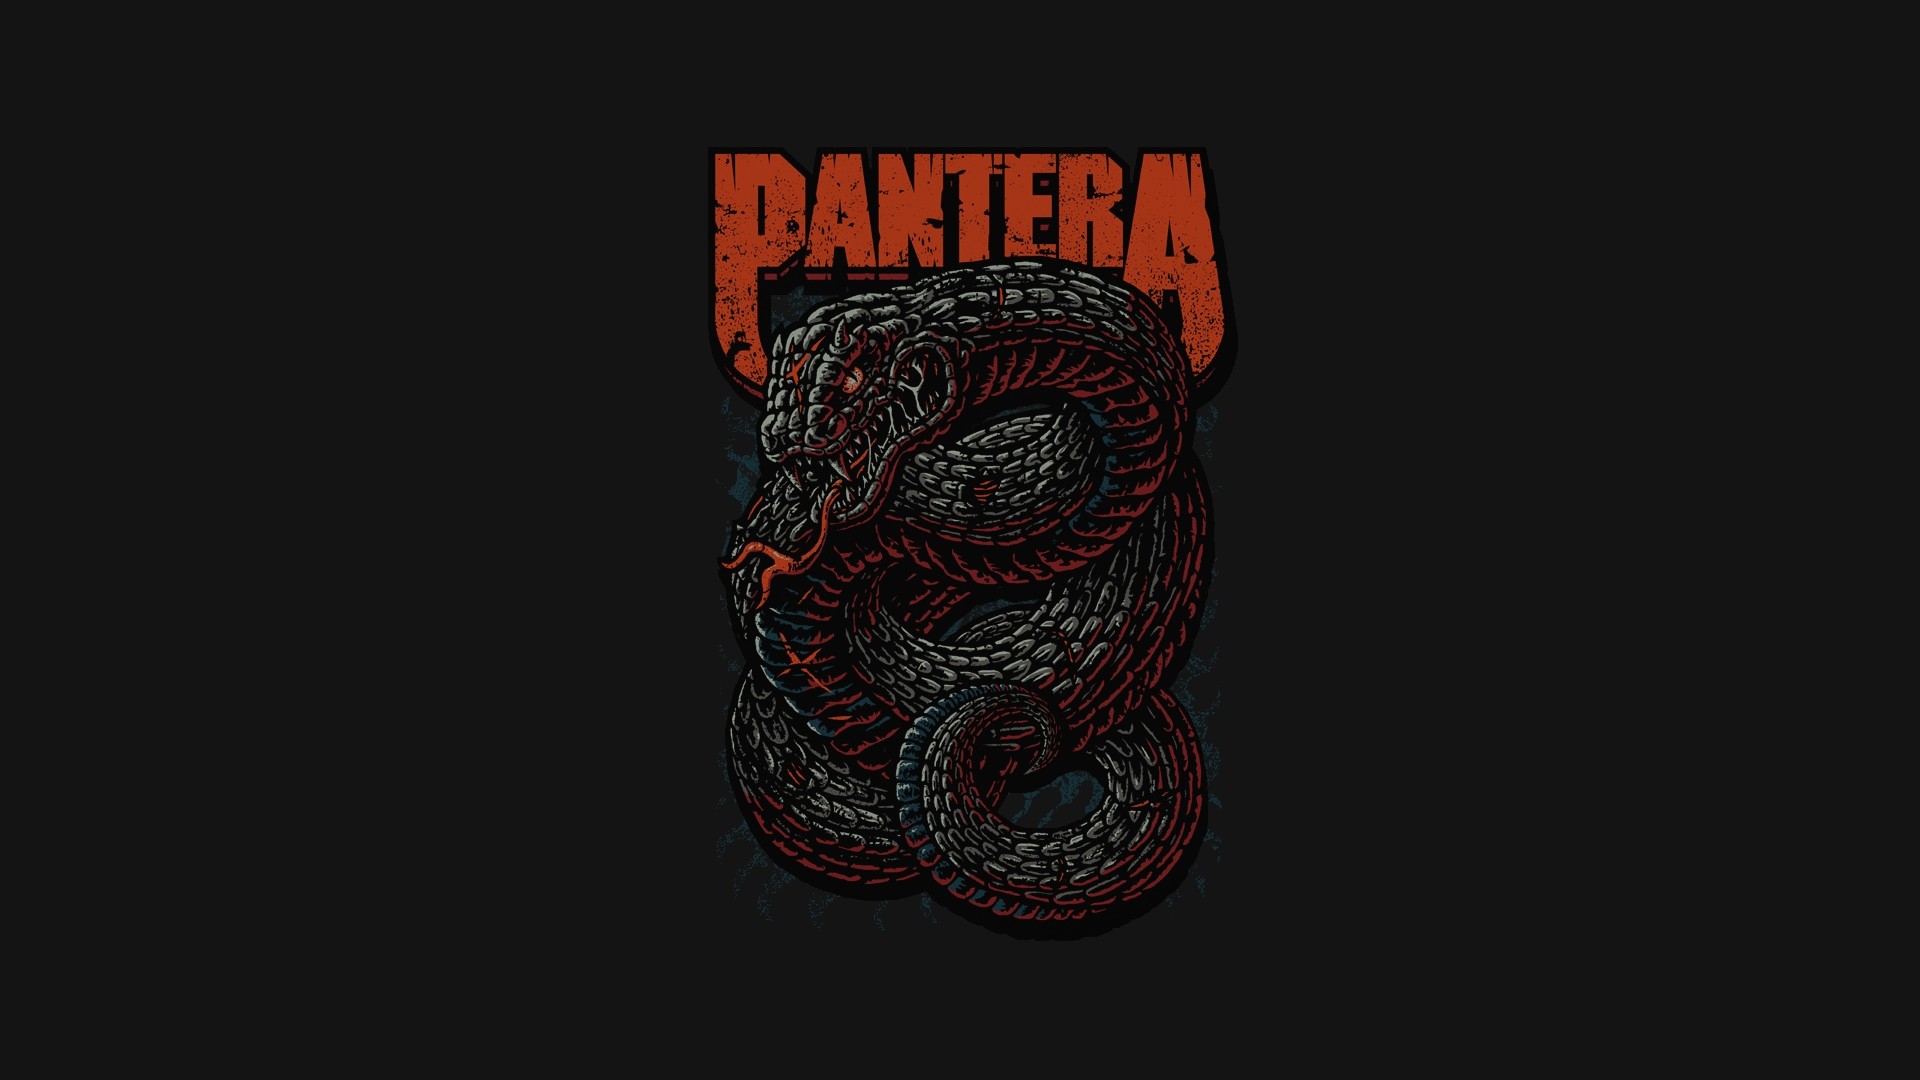 Pantera Heavy Metal Thrash Metal Snake Groove Metal Rock Bands Metal Band Rock Music Metal Music 1920x1080